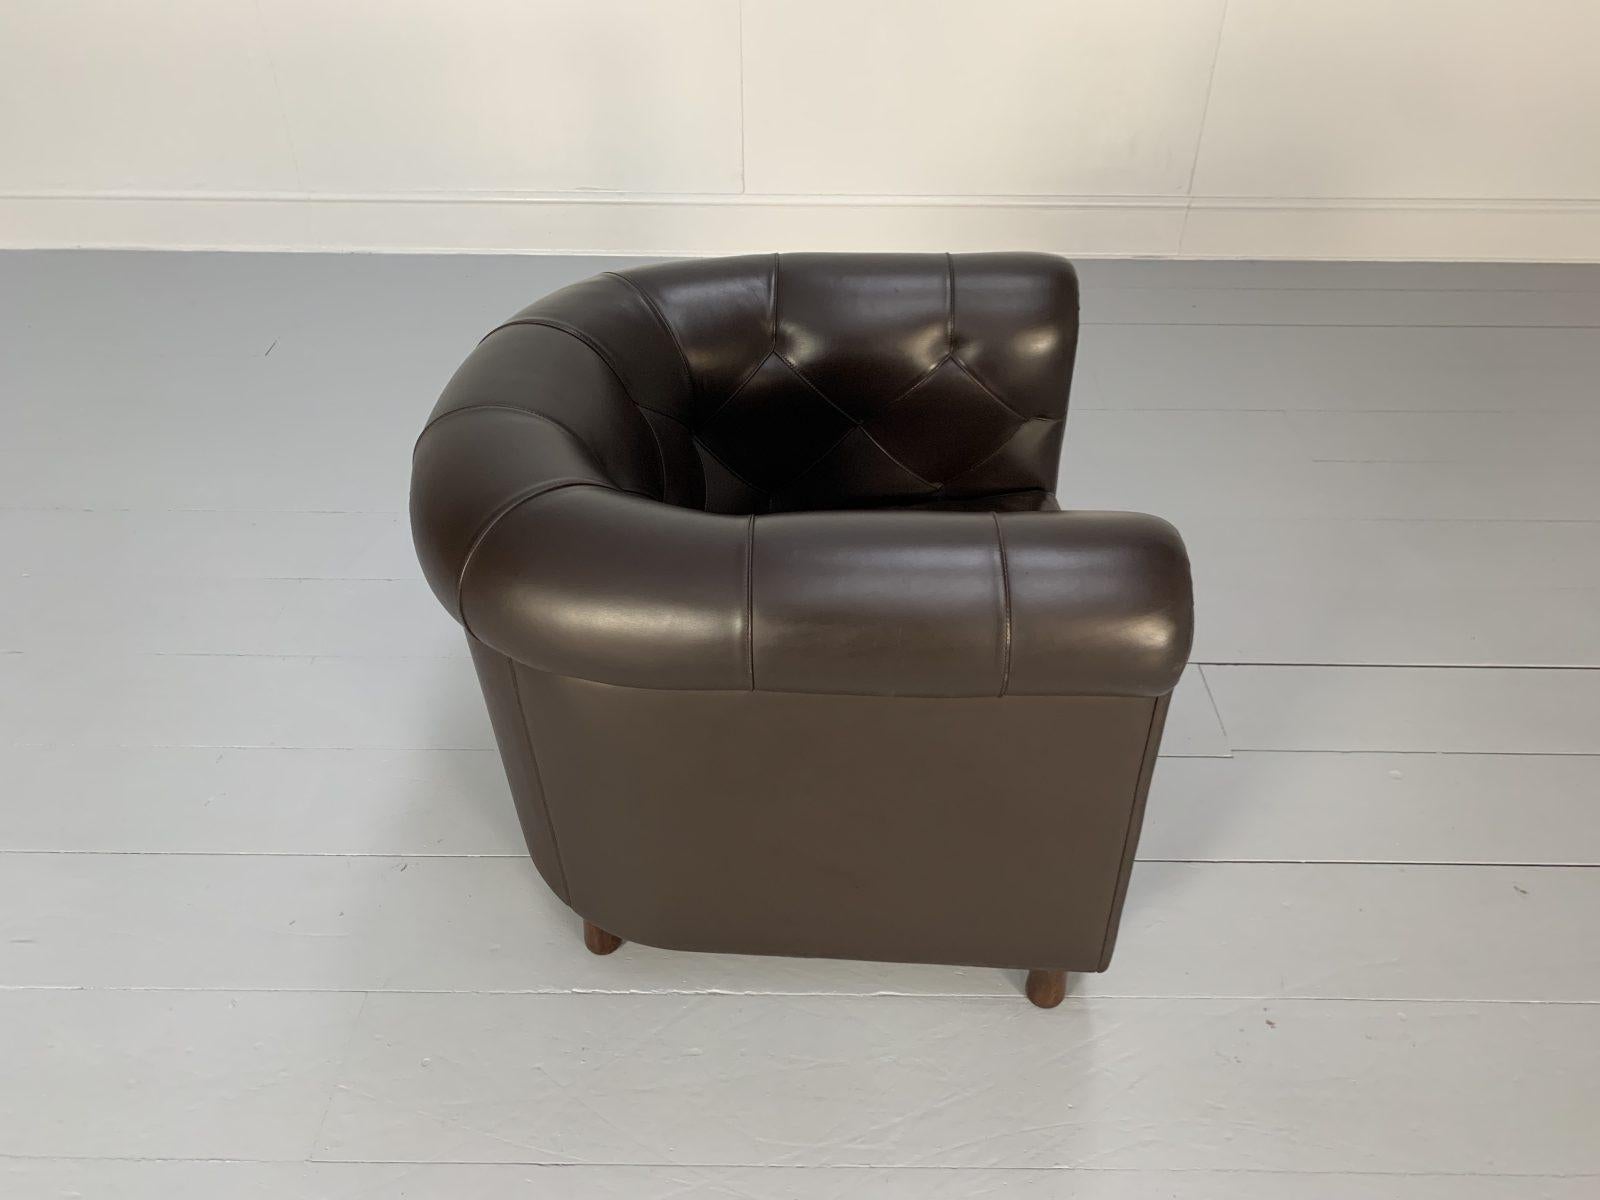 2 Poltrona Frau “Arcadia” Armchairs, in “Pelle Frau” Dark Brown Leather For Sale 5